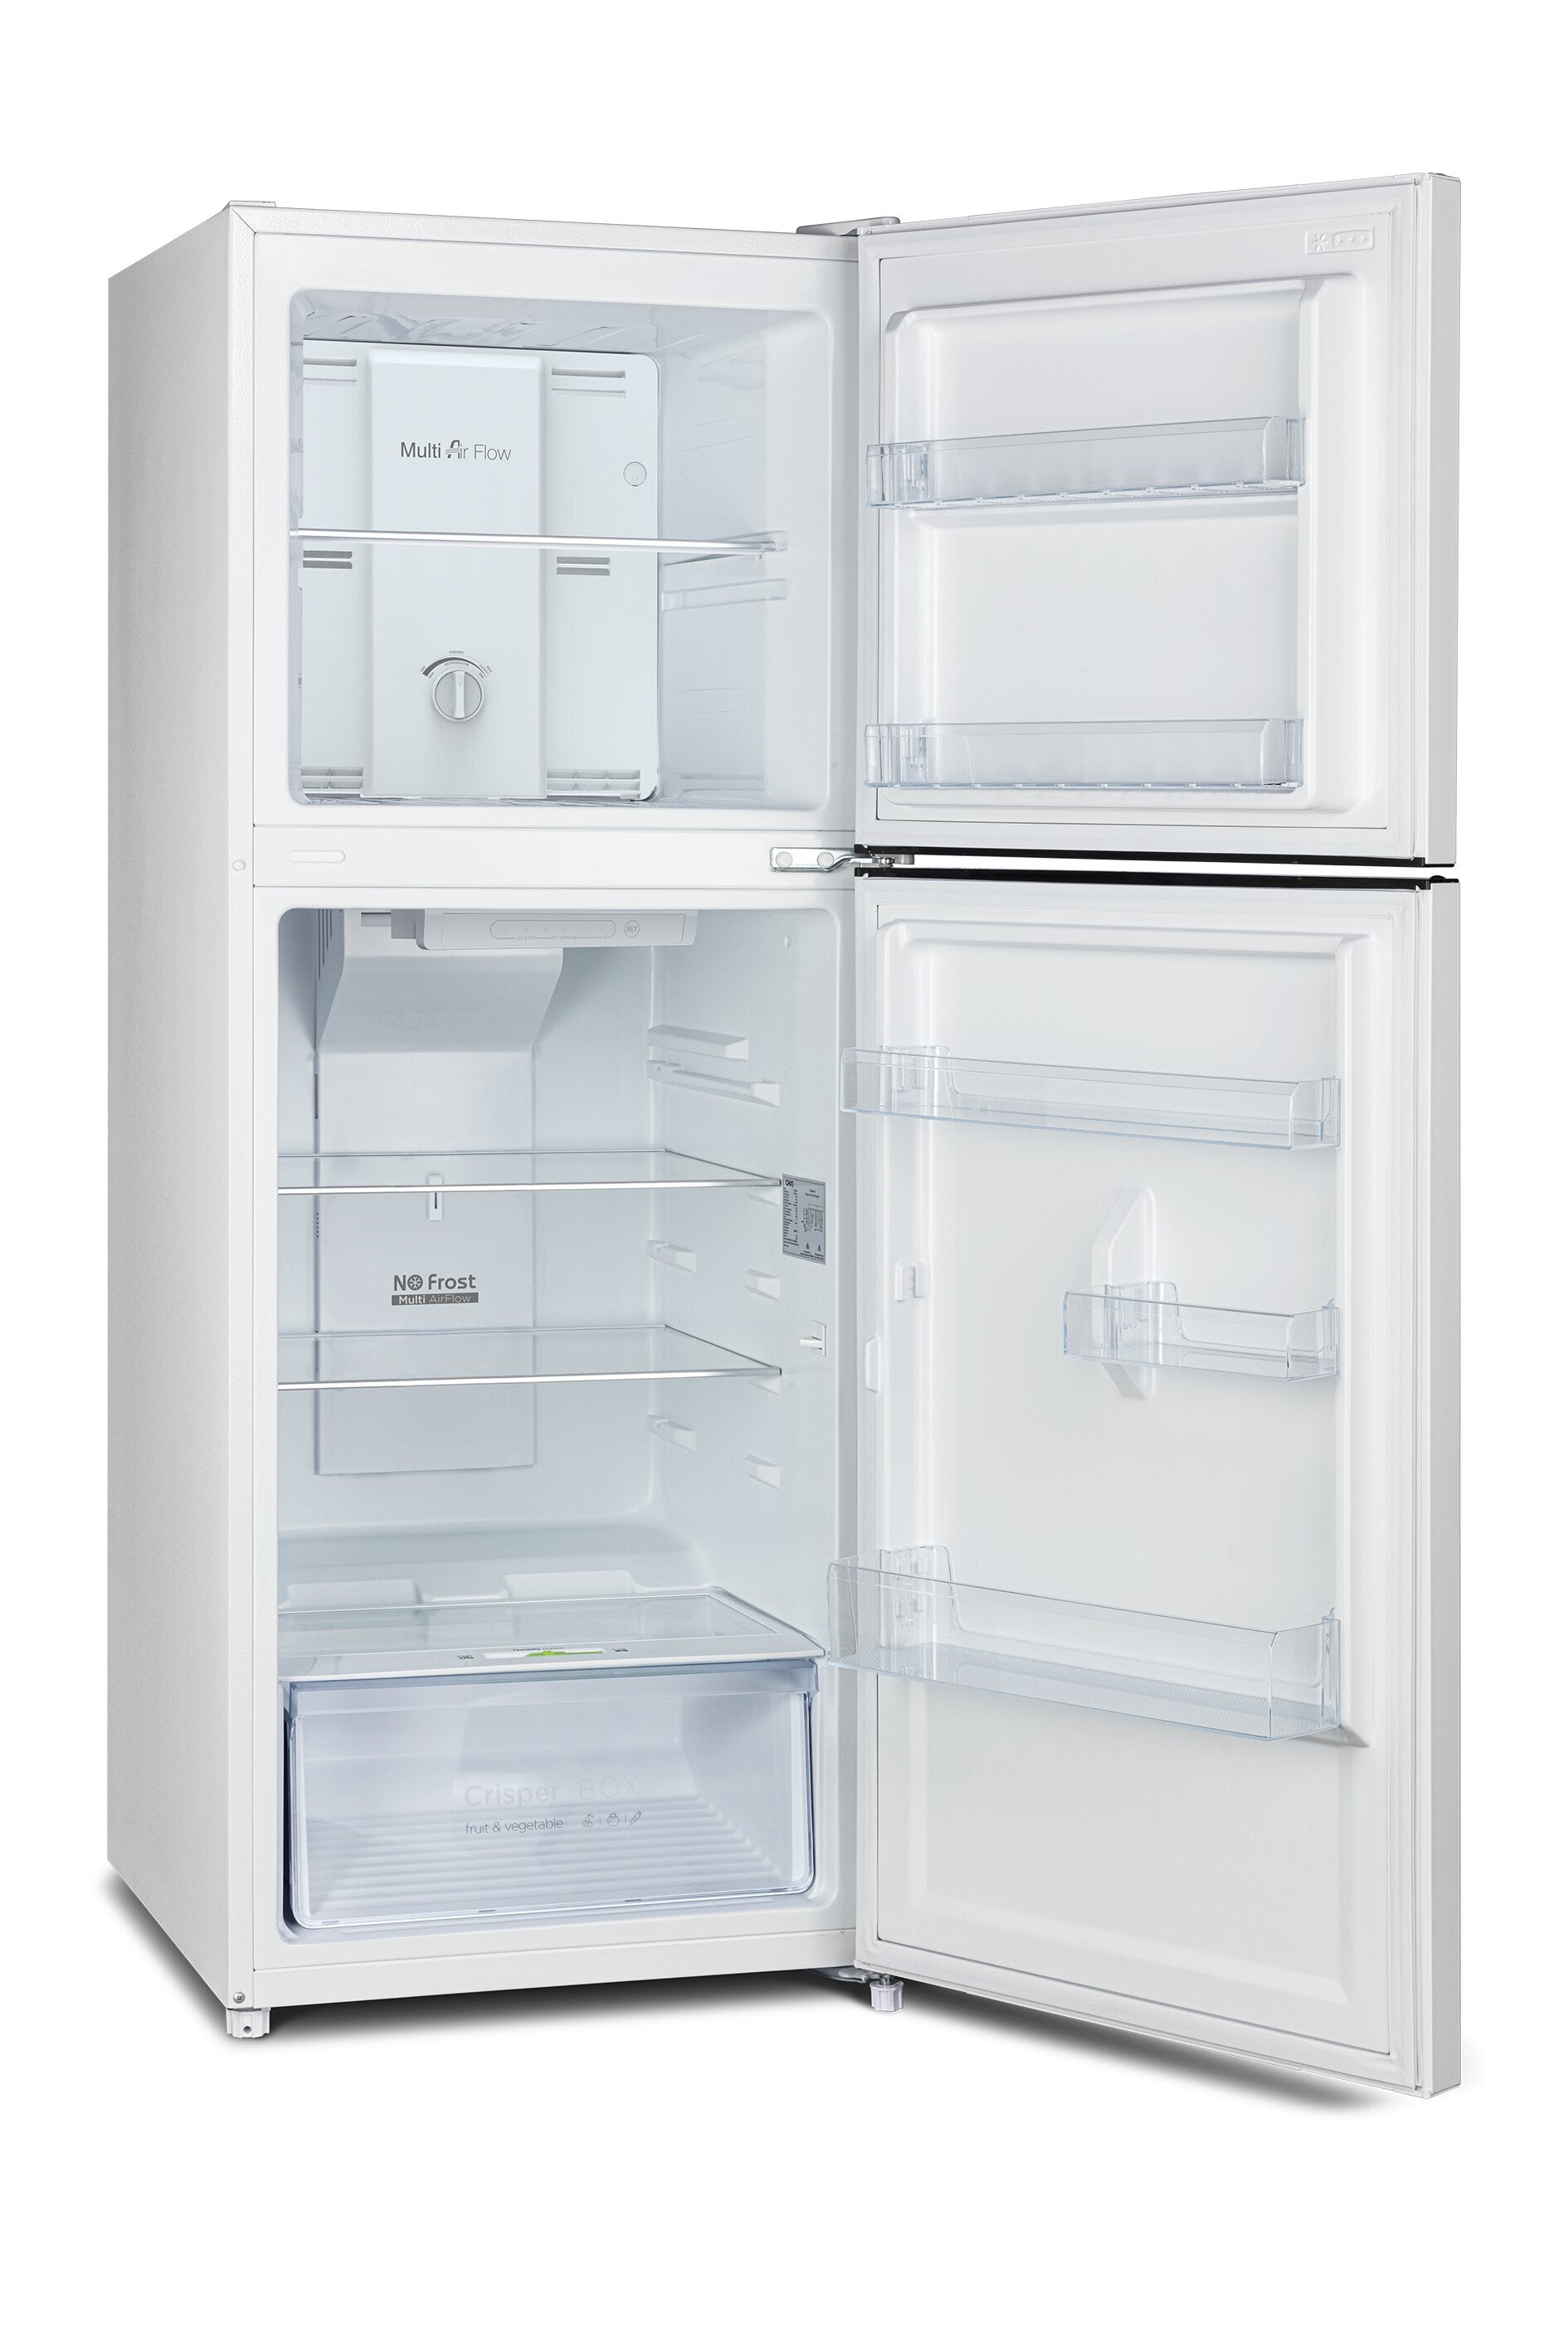 CHiQ 202L Top Mount Refrigerator